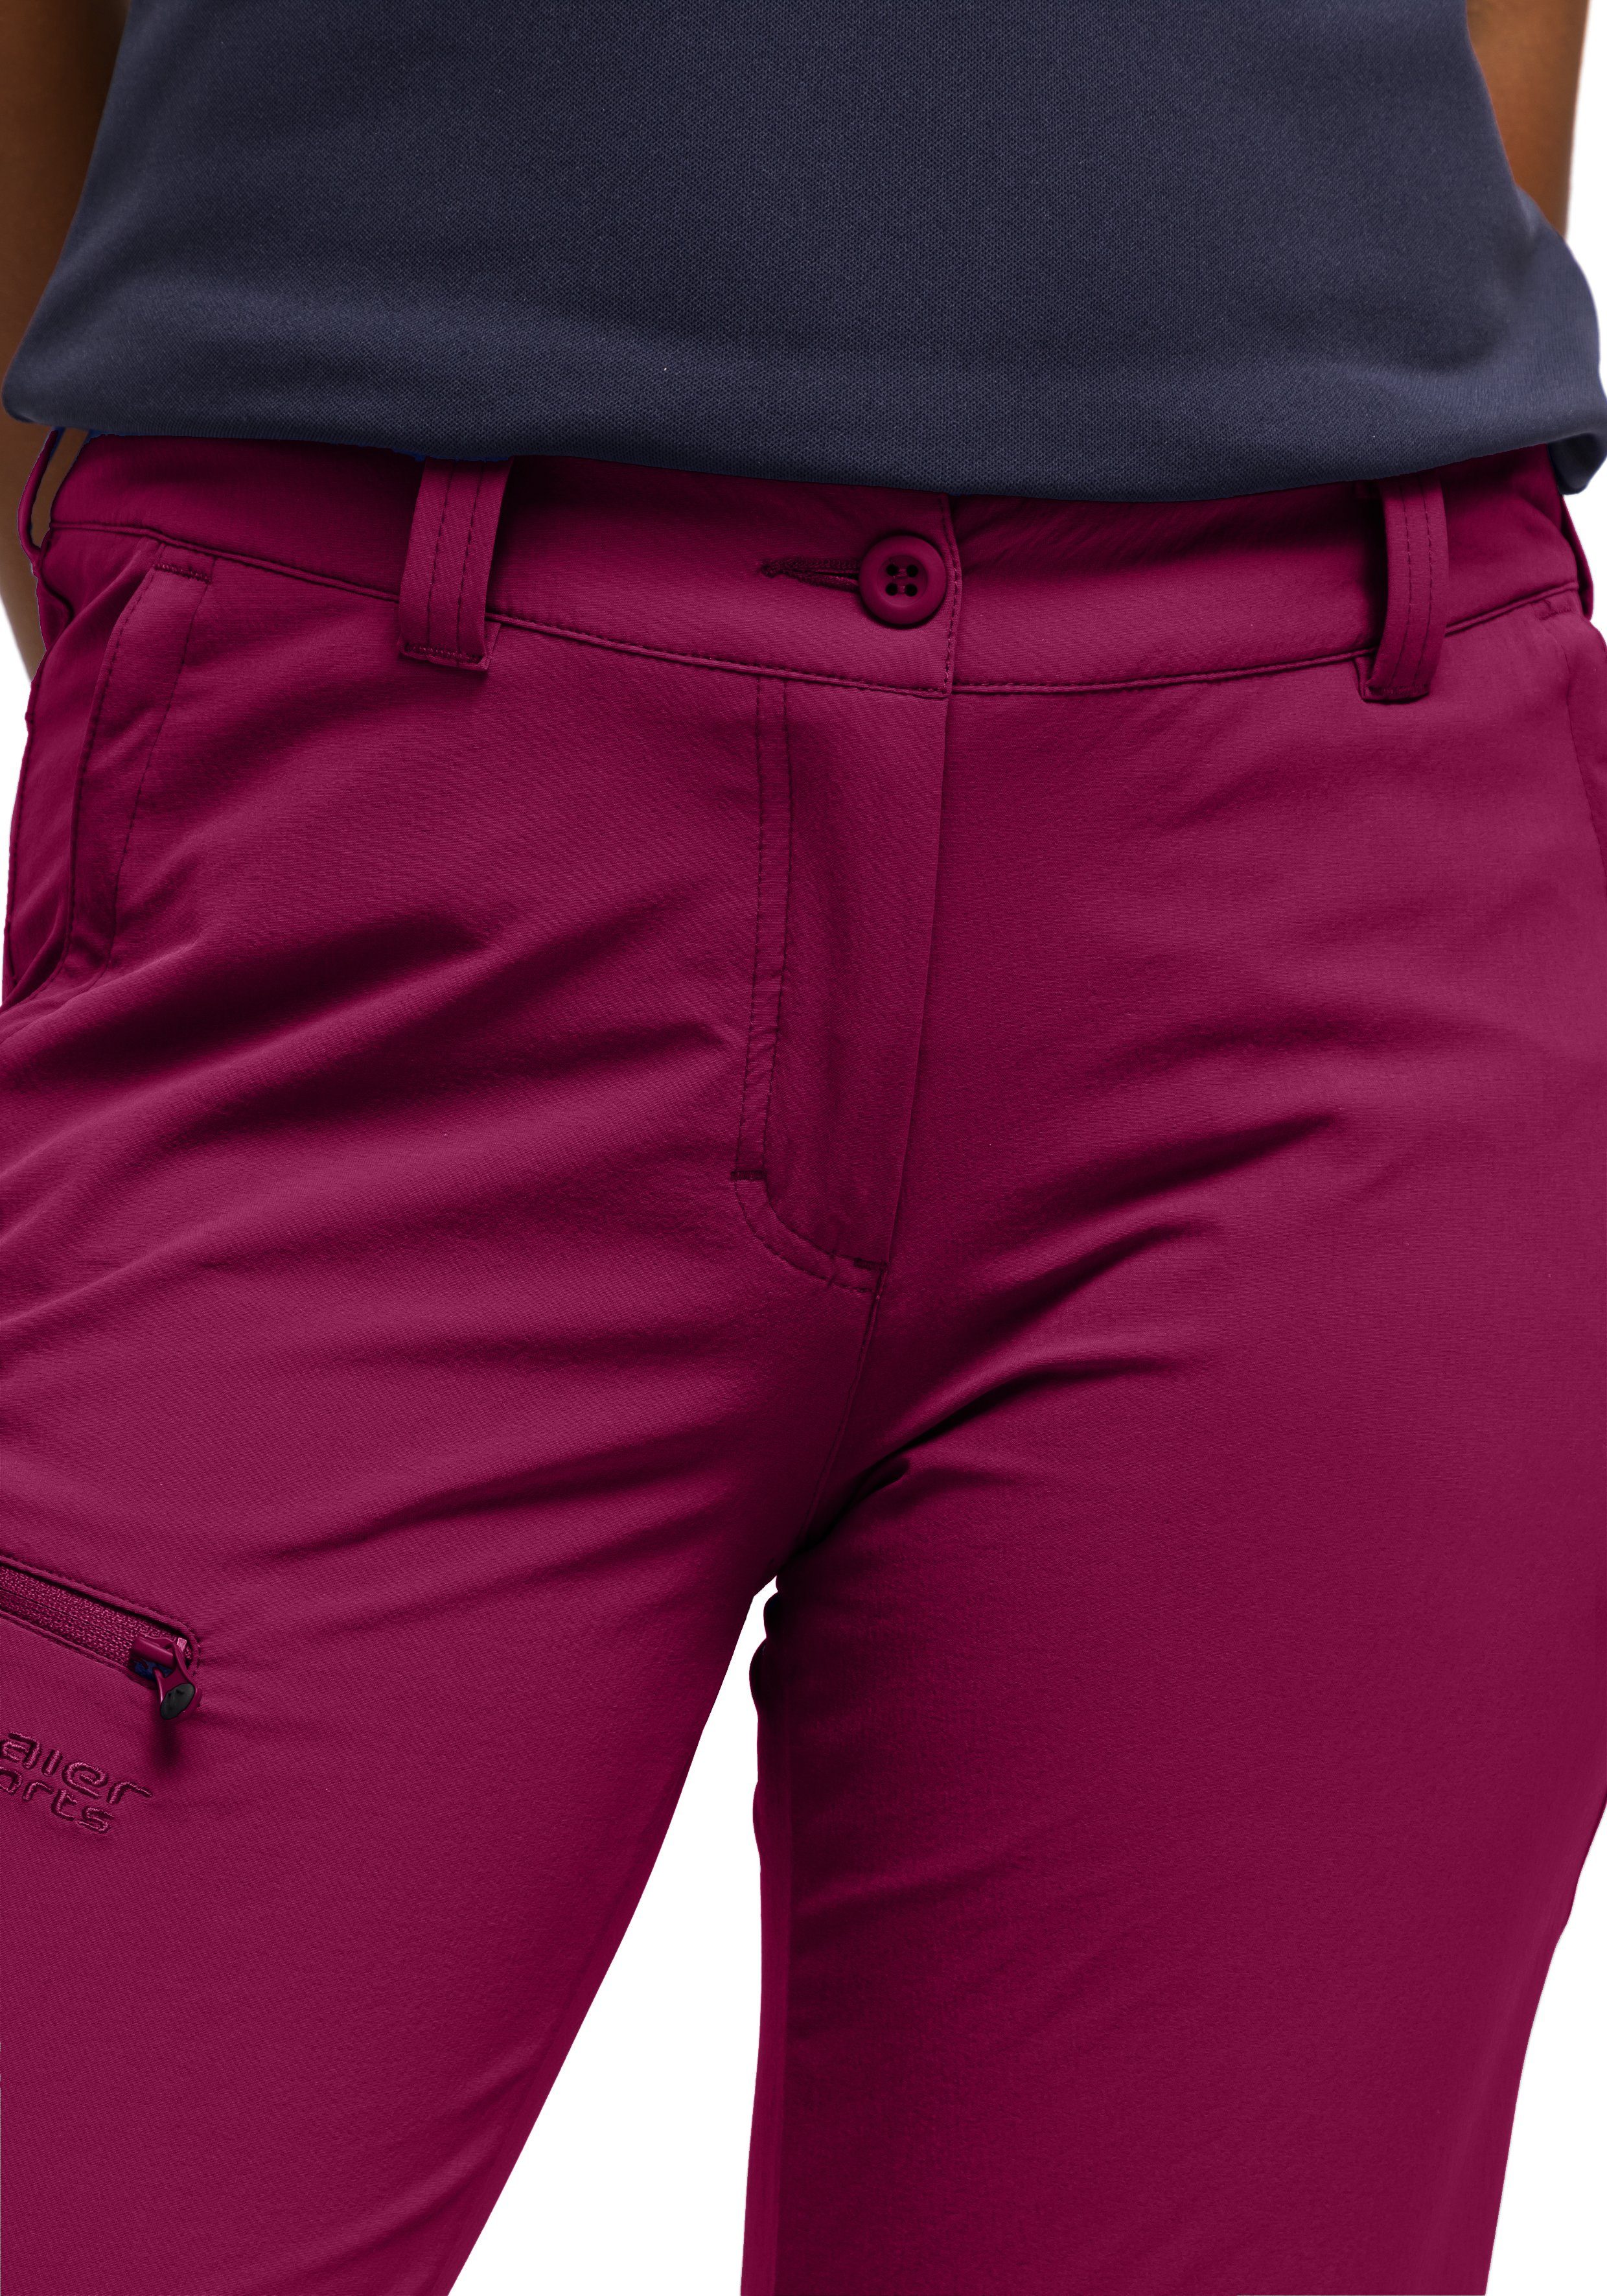 Sports Inara Outdoor-Hose elastischem Damen Material Funktionshose slim Maier magenta Wanderhose, aus